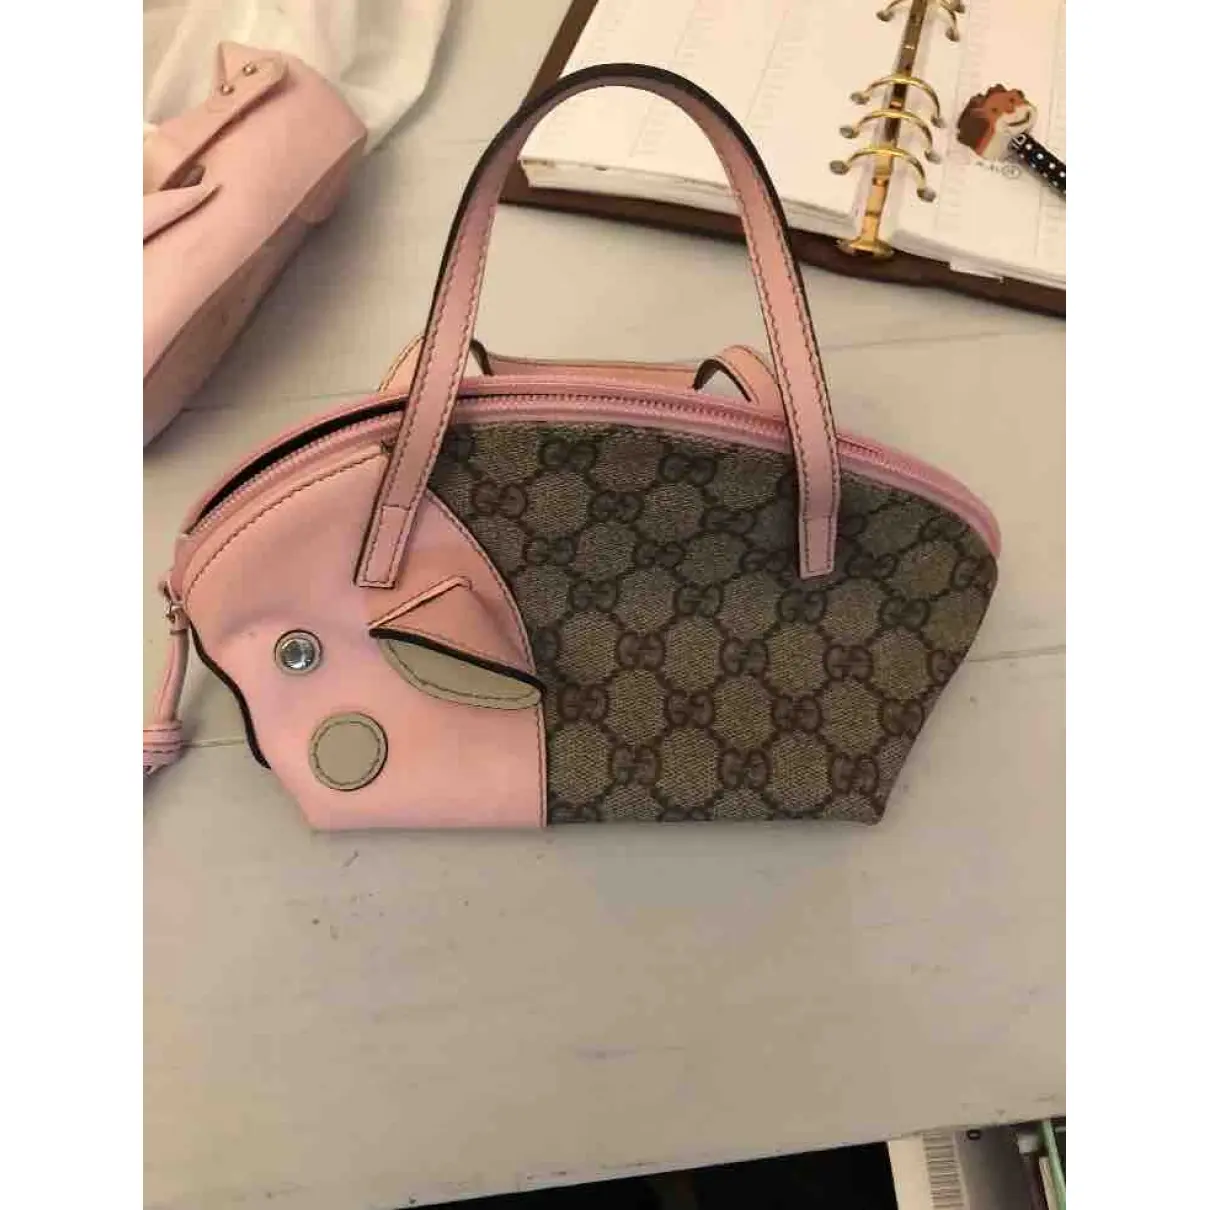 Gucci Leather bag & pencil case for sale